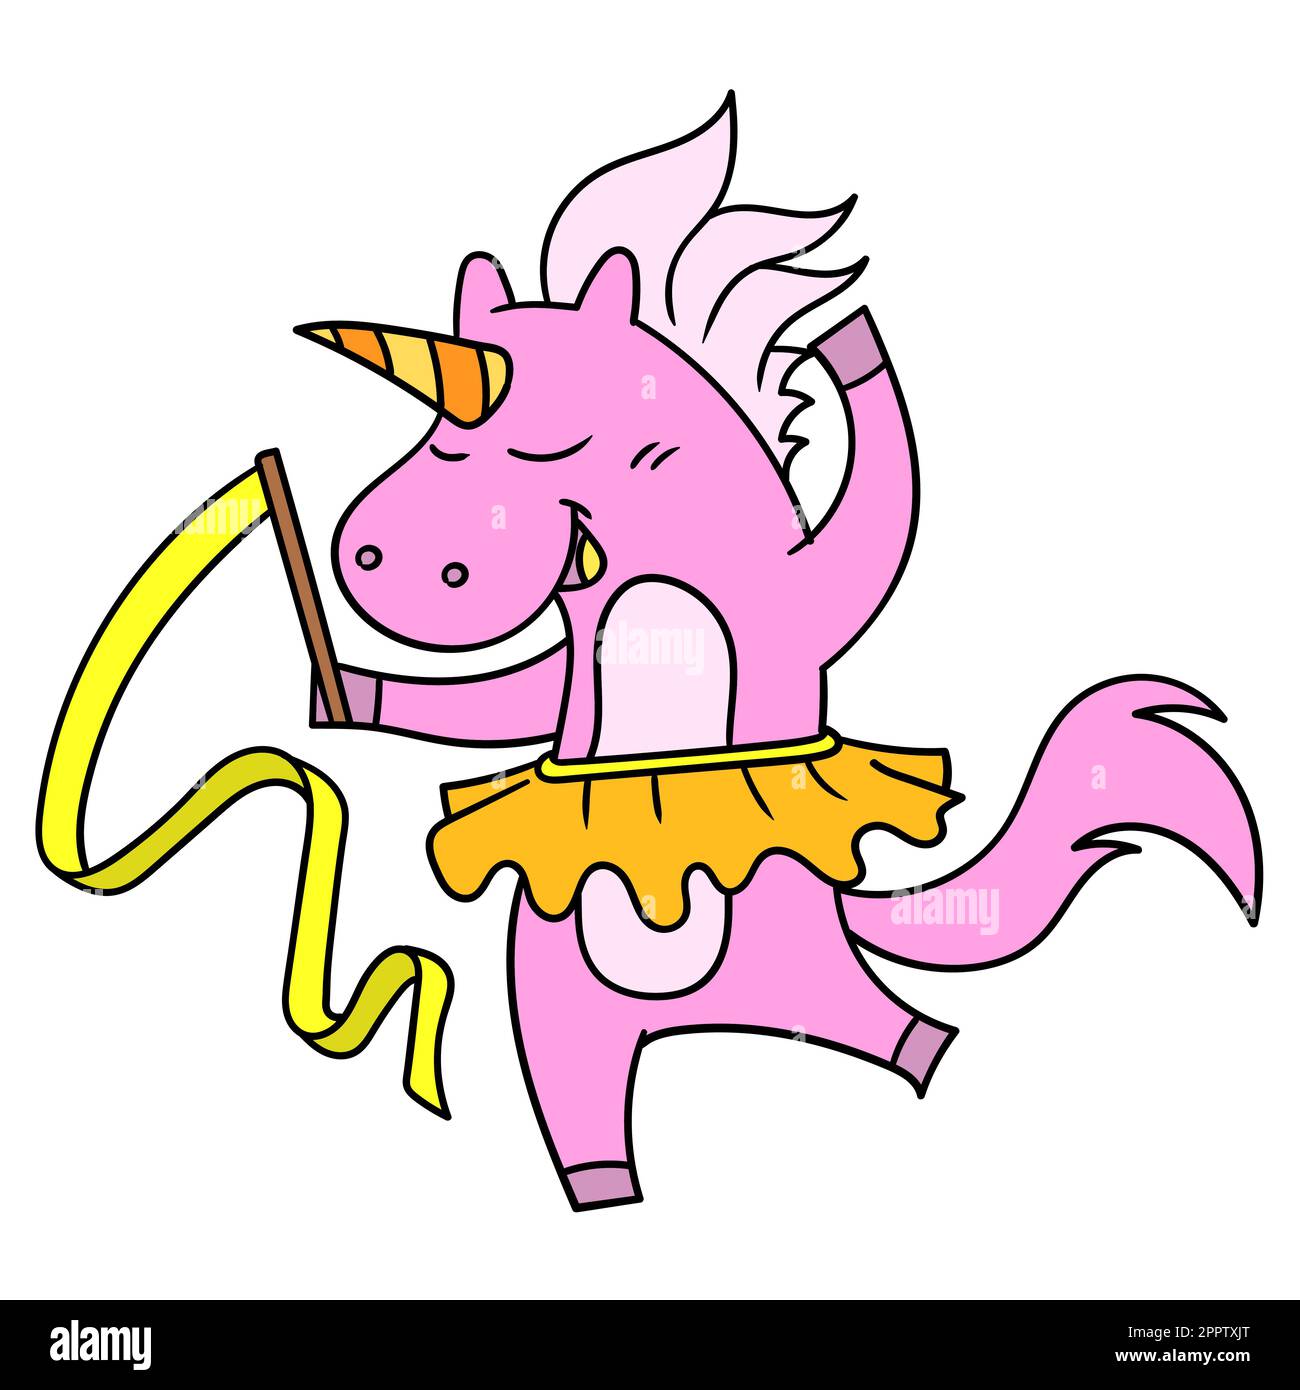 unicorn ponies dance ballet with flexible movements, doodle icon image kawaii Stock Vector